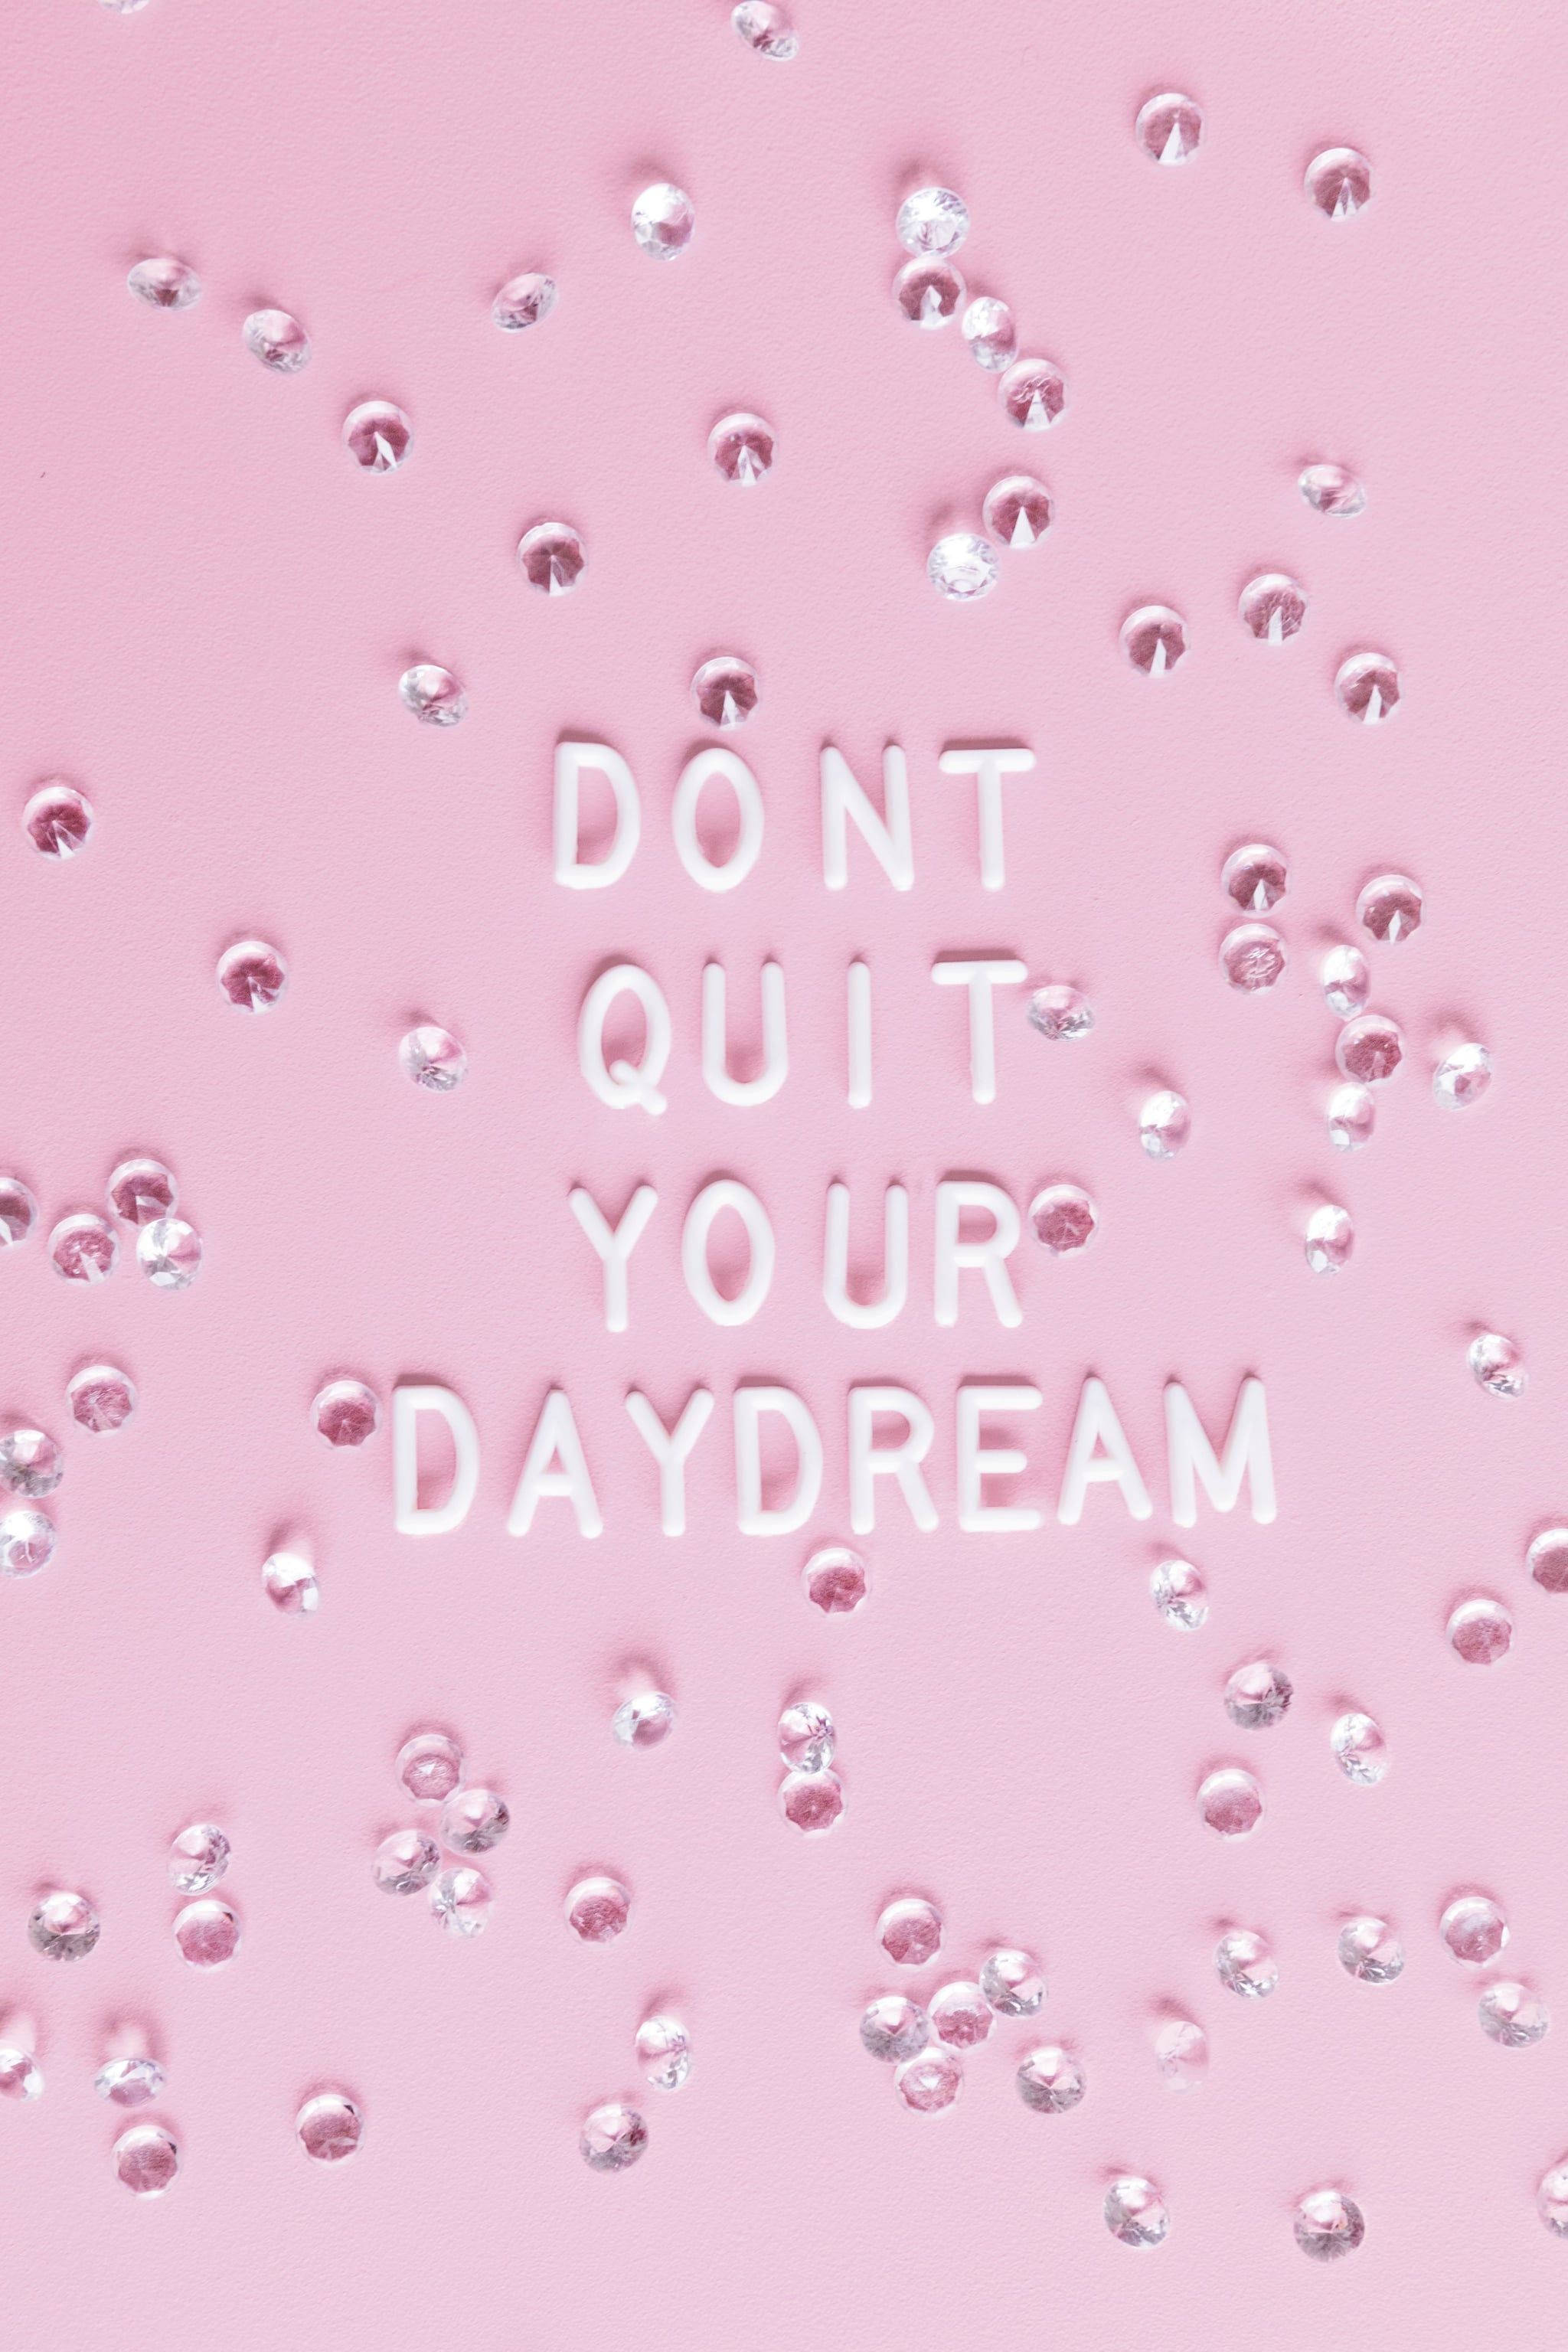 Inspiring Quotes Phone Daydream